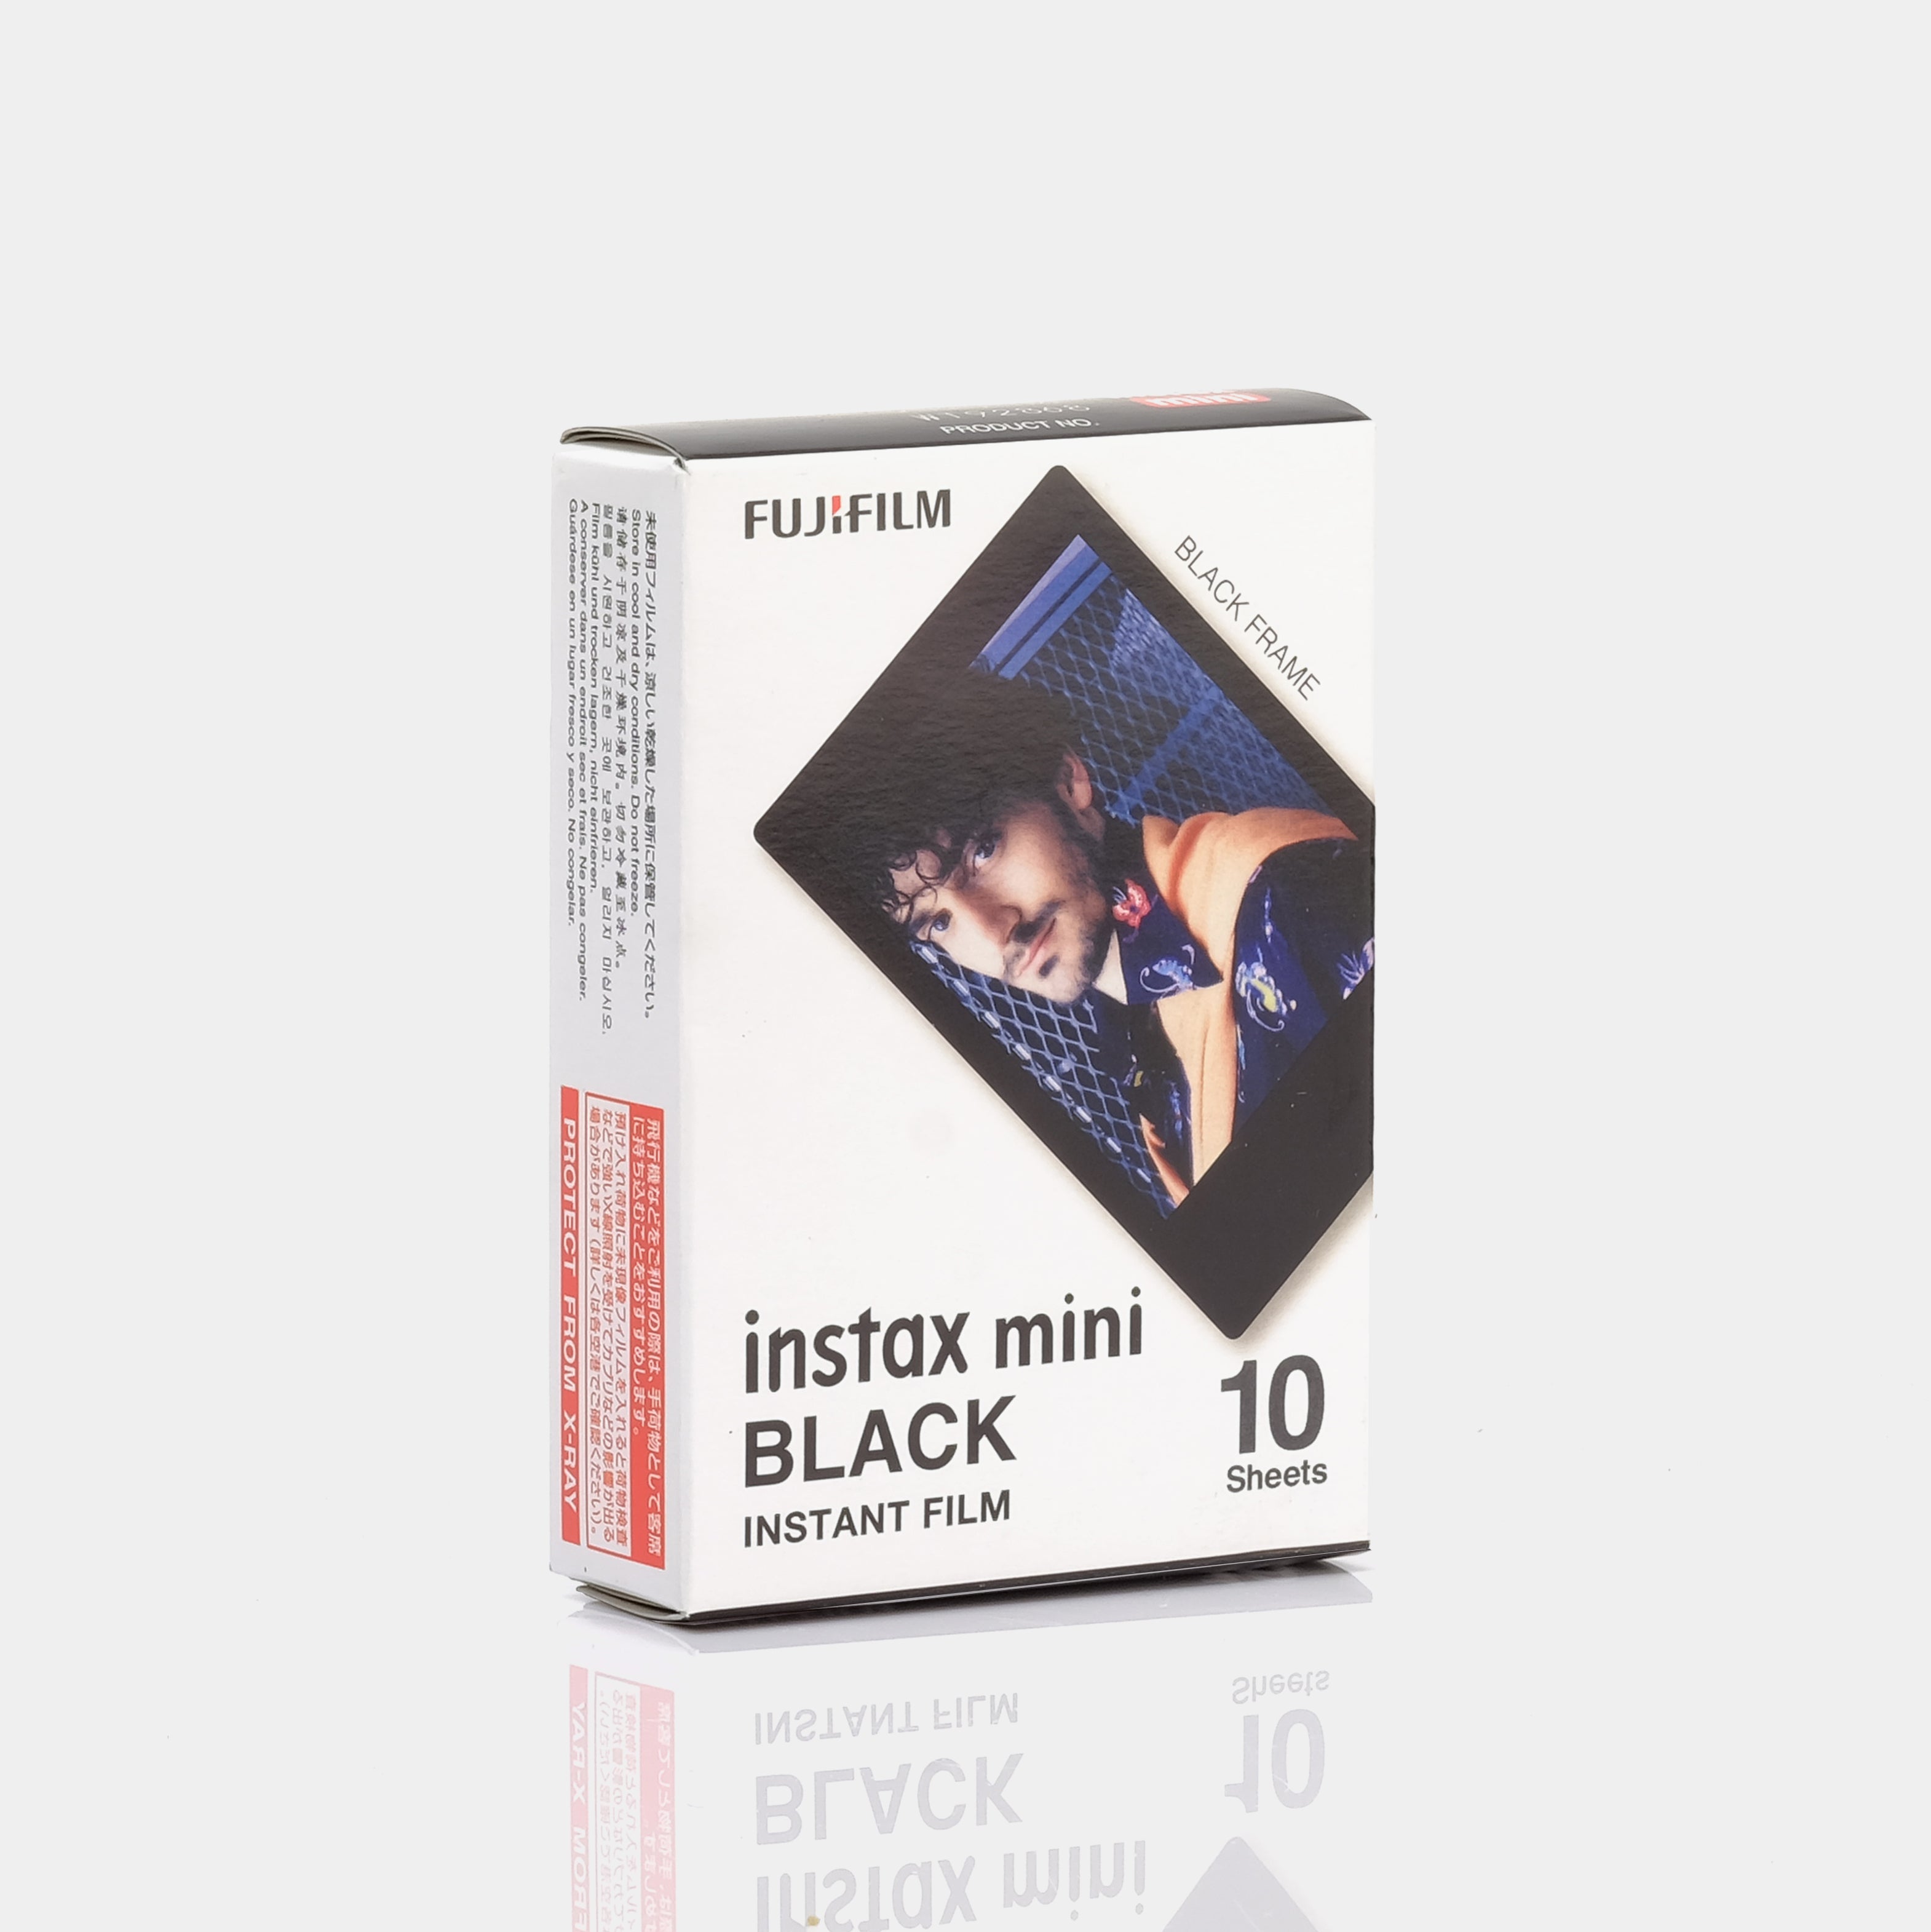 Fujifilm Instax Mini Black Instant Film